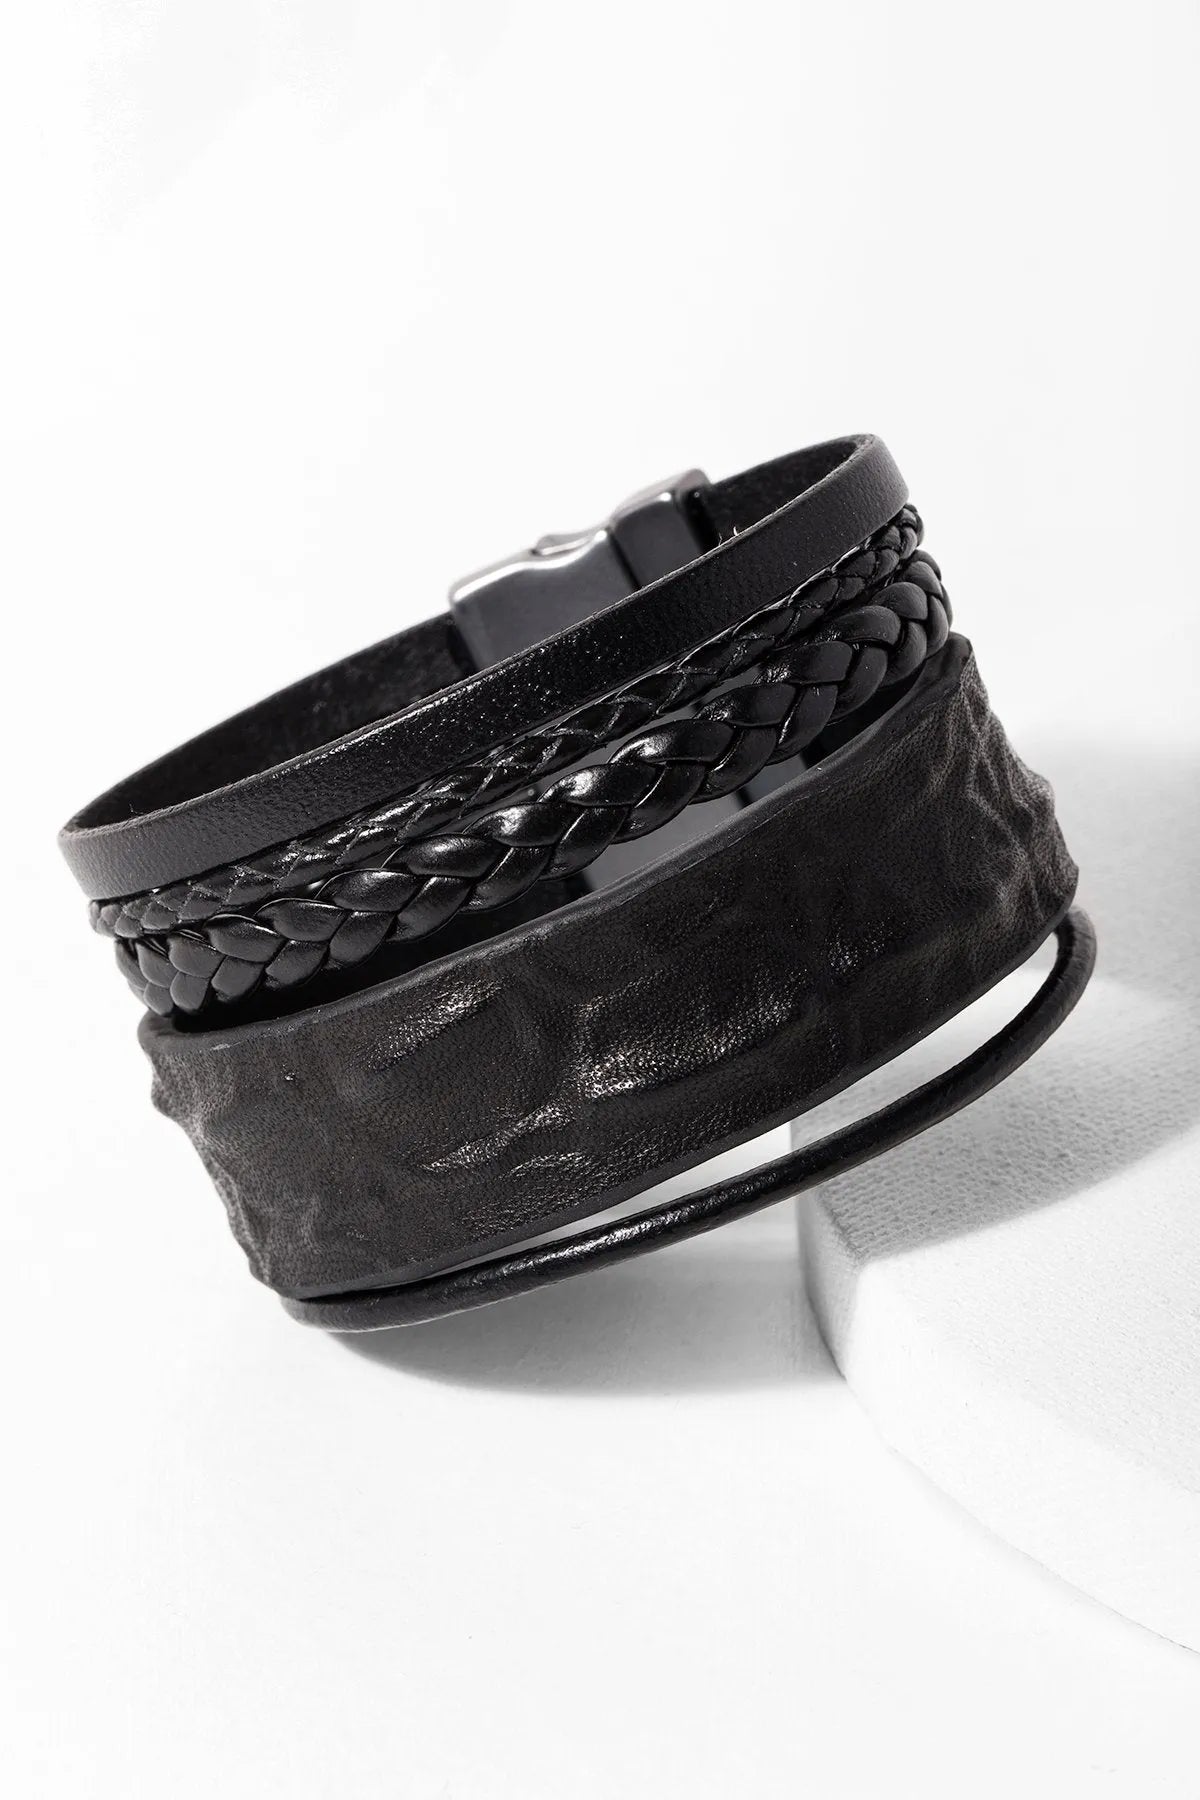 Saachi Style Flaunt Double Wrap Leather Bracelet - Black